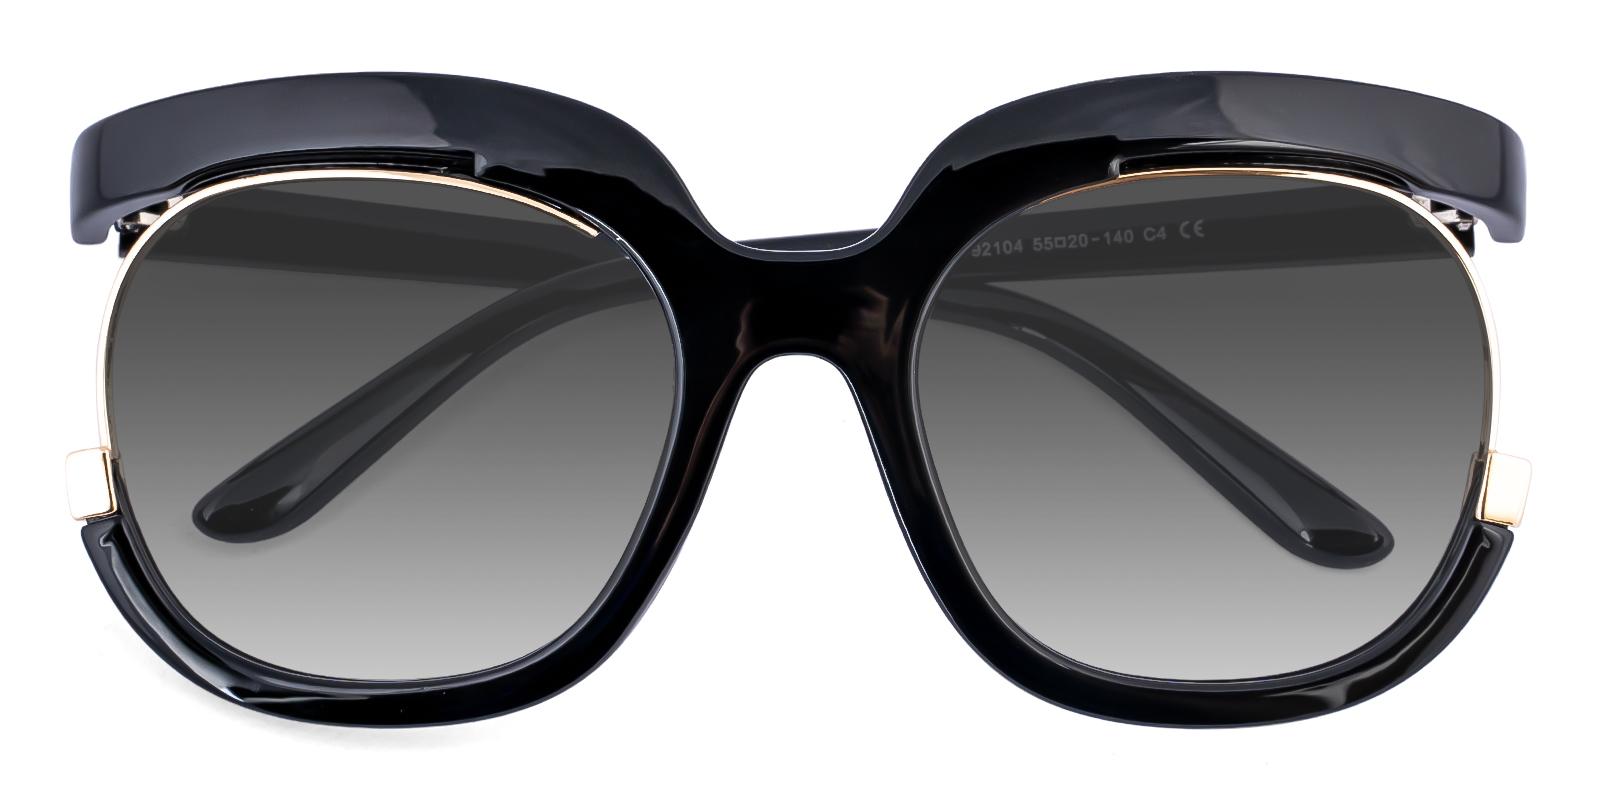 Writerular Black Plastic Sunglasses , UniversalBridgeFit Frames from ABBE Glasses